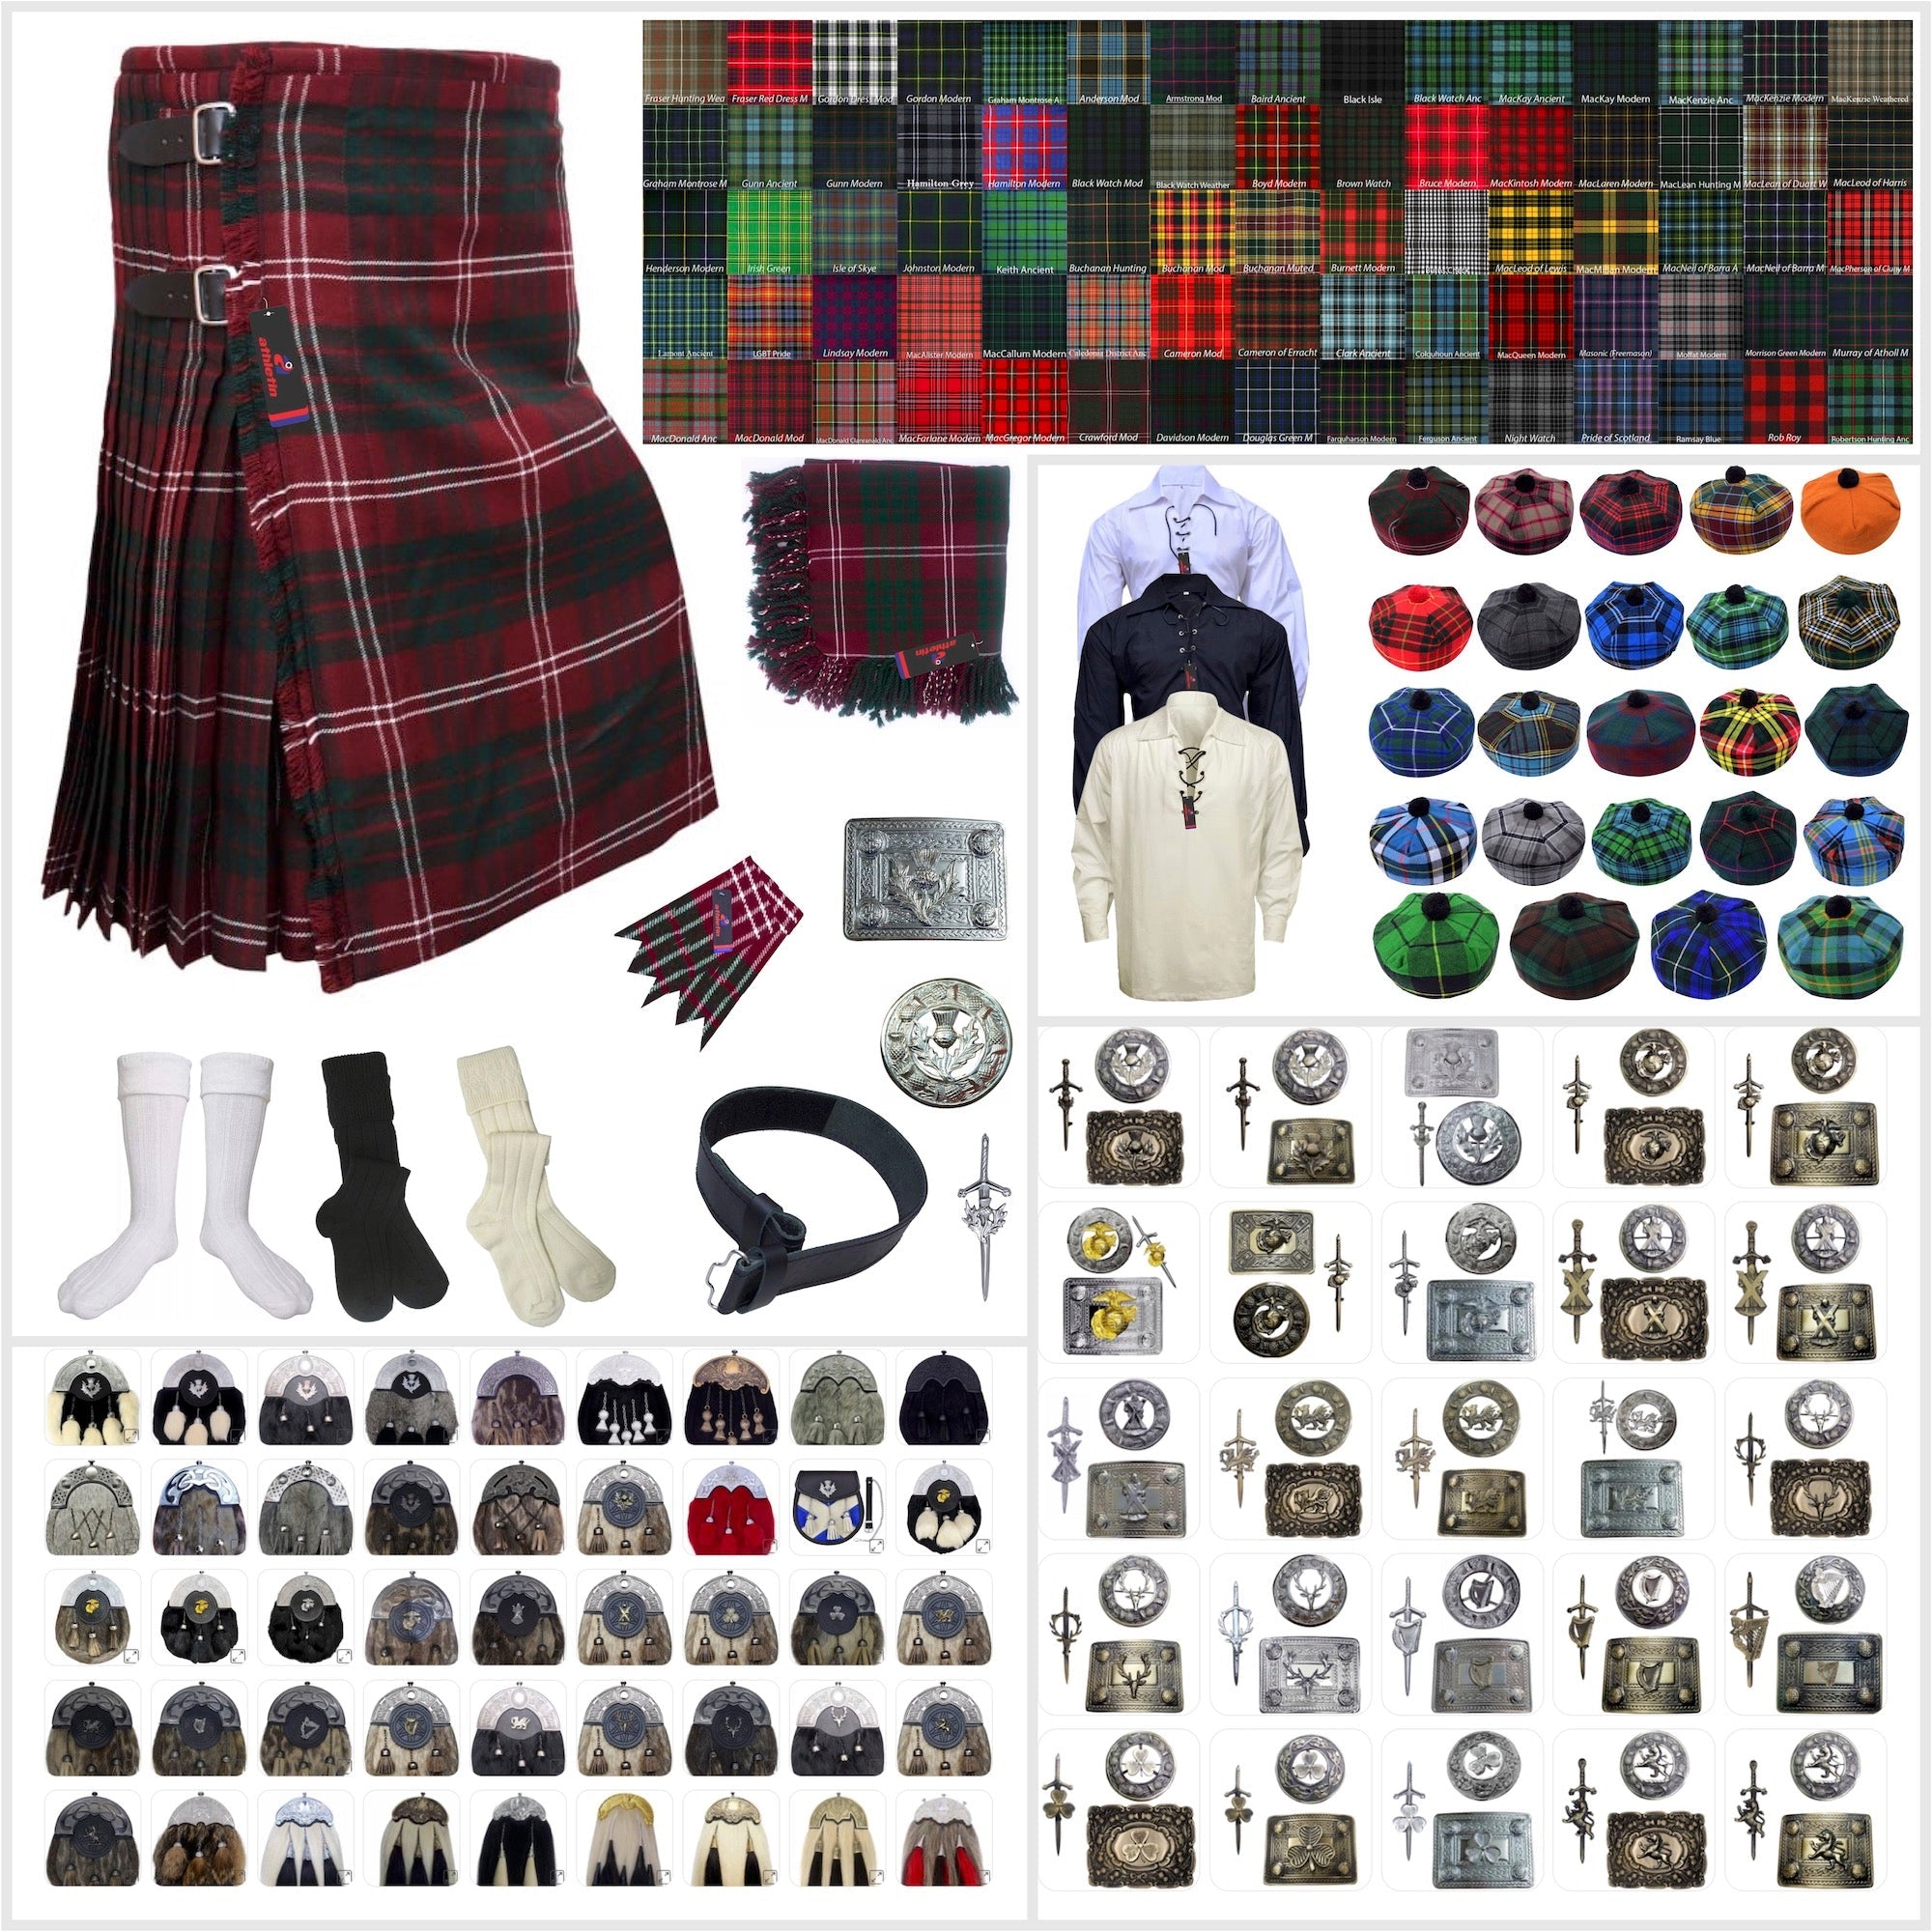 Crawford Tartan Kilt Outfit - Authentic Scottish Heritage Wear